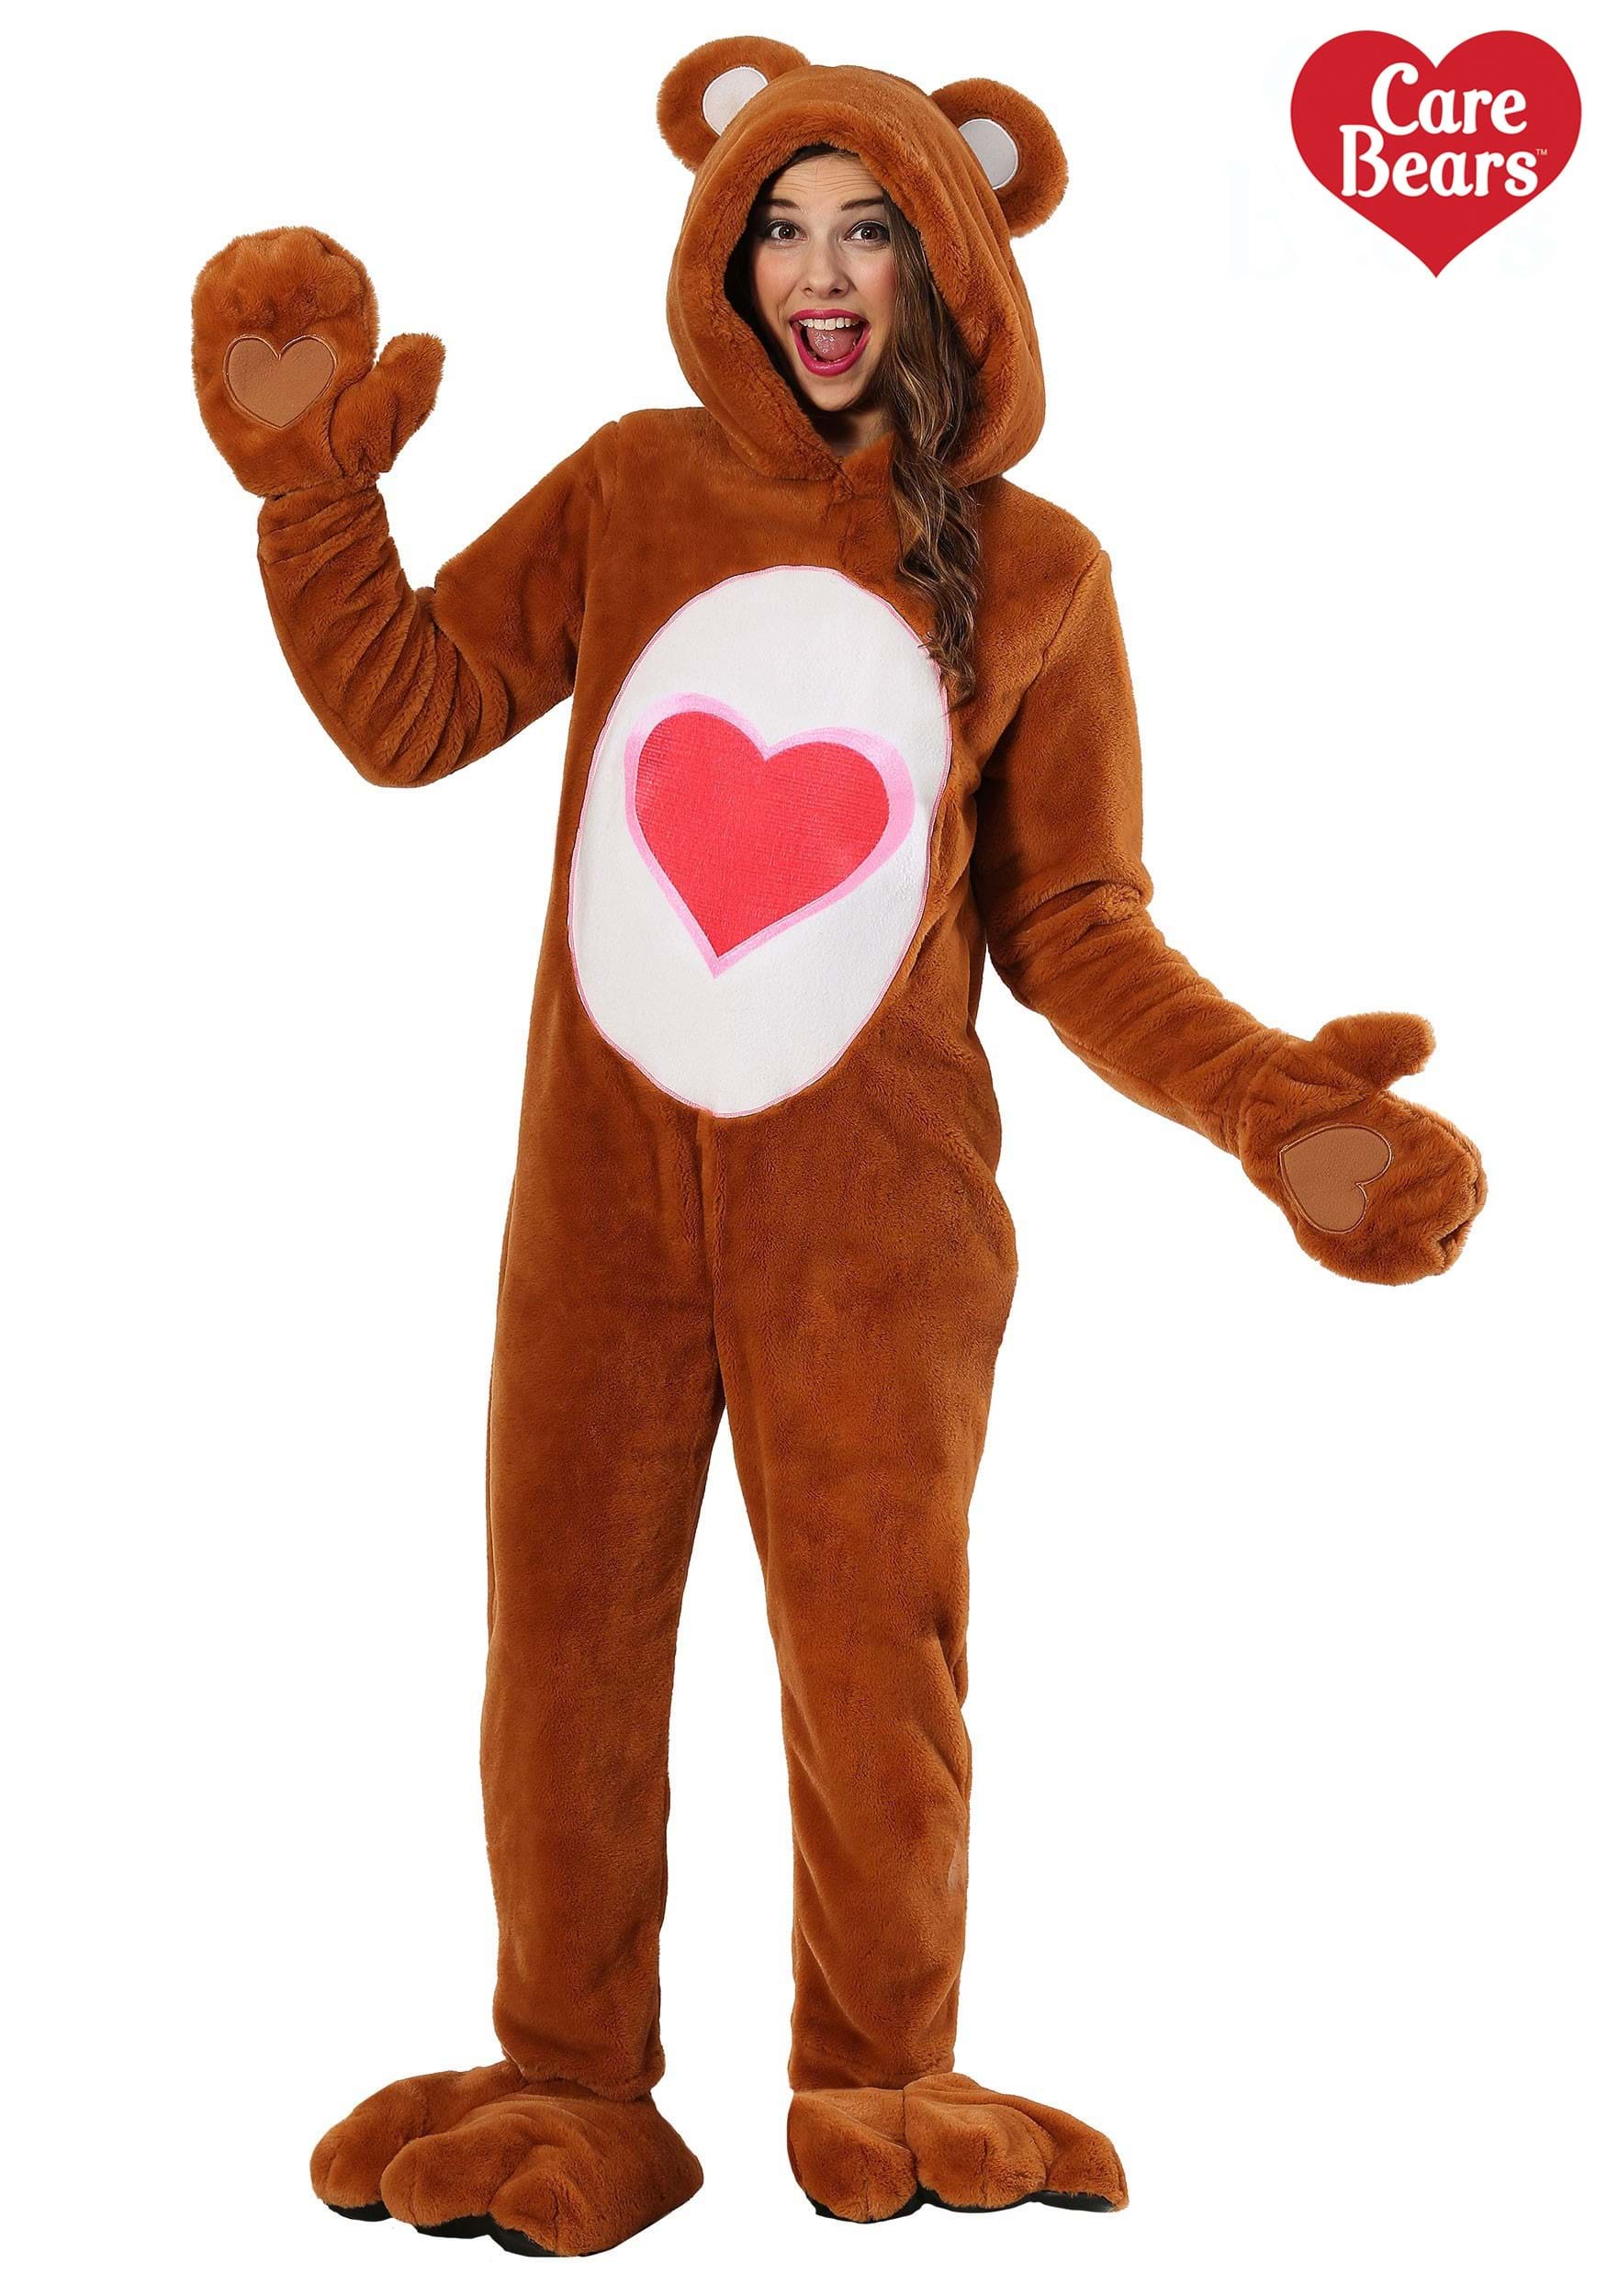 Care Bears Deluxe Tenderheart Bear Costume For Adults